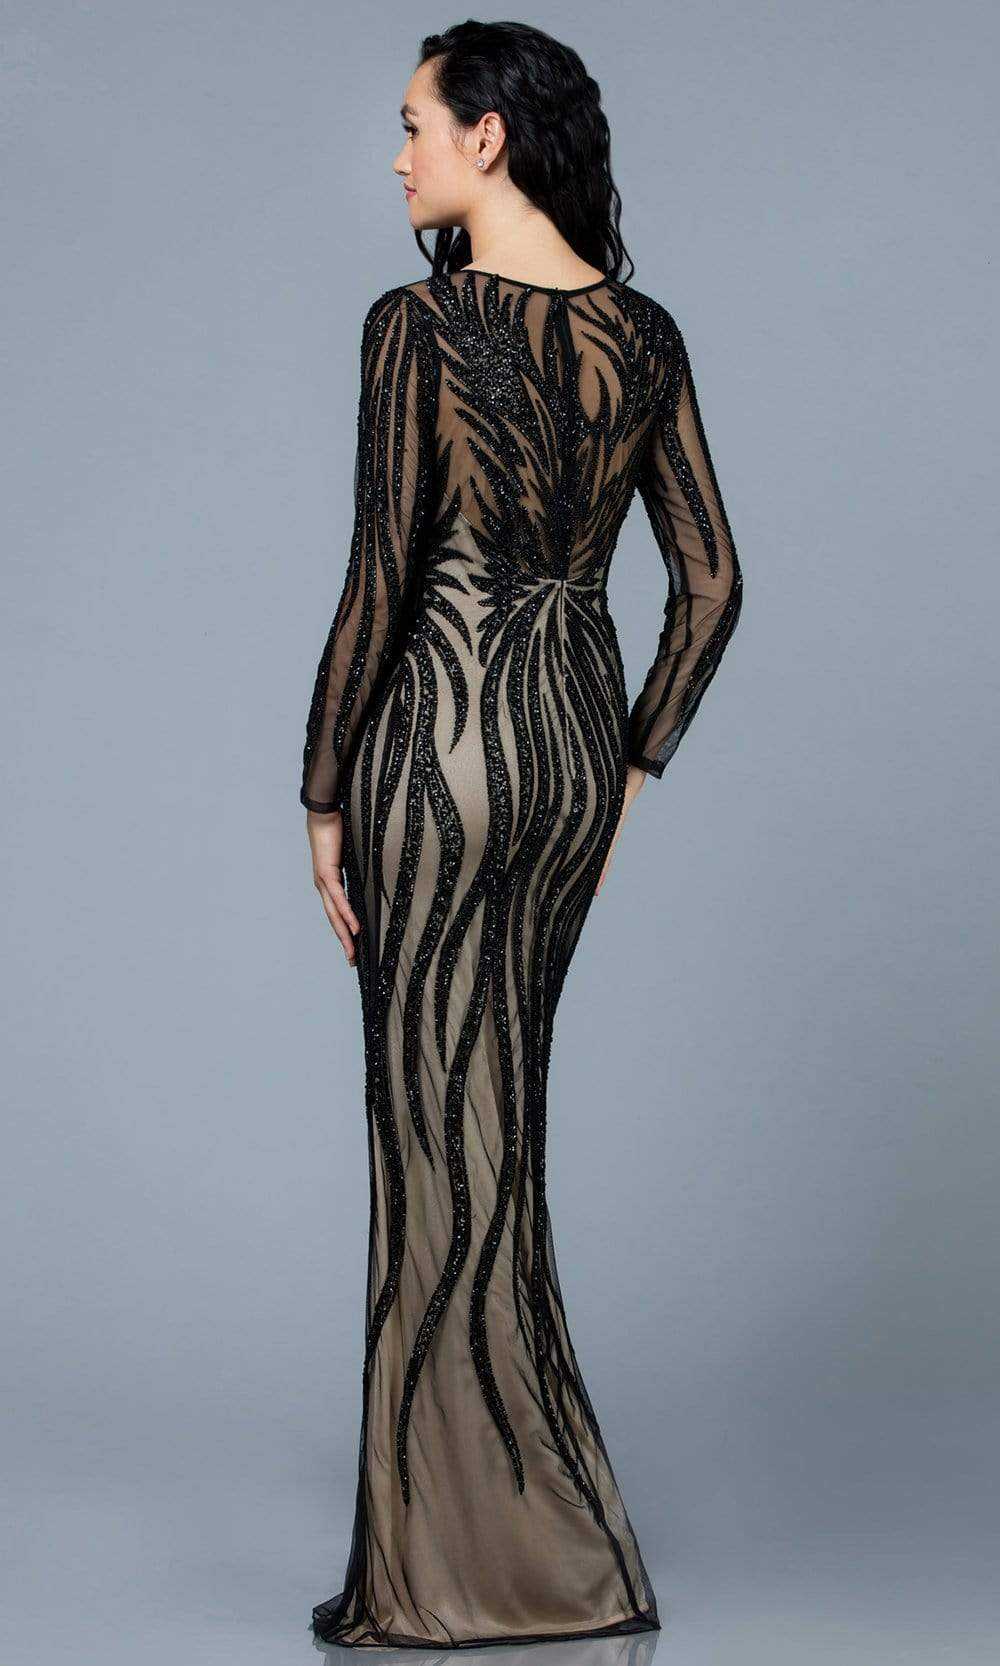 SCALA, SCALA - 60189 Sequin Embellished Illusion Scoop Dress